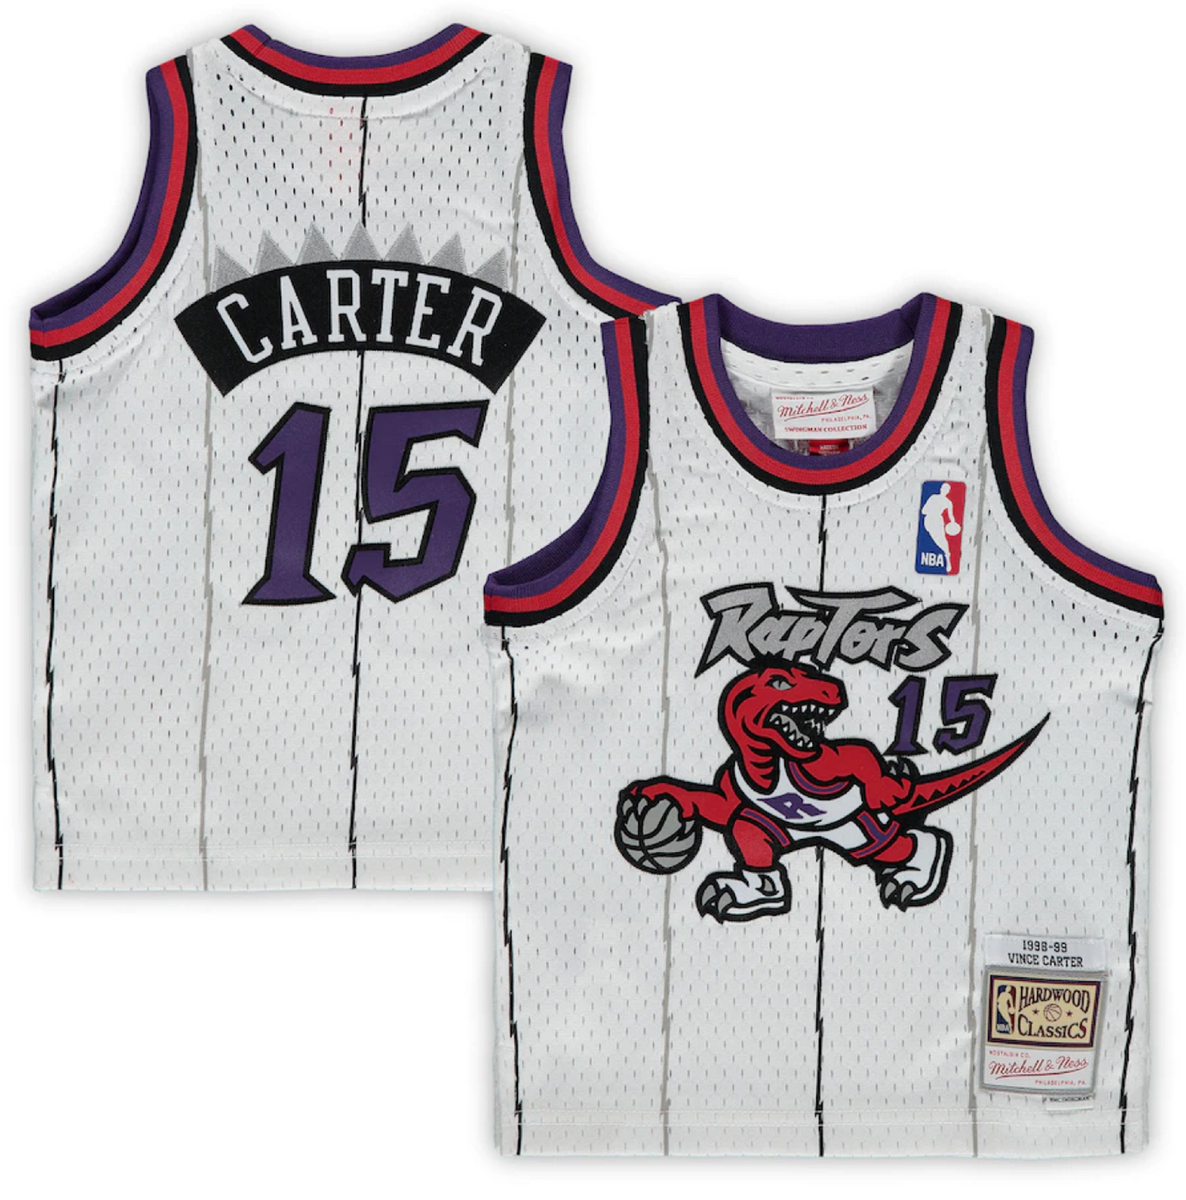 New Original NBA Basketball Men's Jersey Toronto Raptors #15 Vince Carter  Heat-pressed Retro Swingman Jerseys Customize White Set